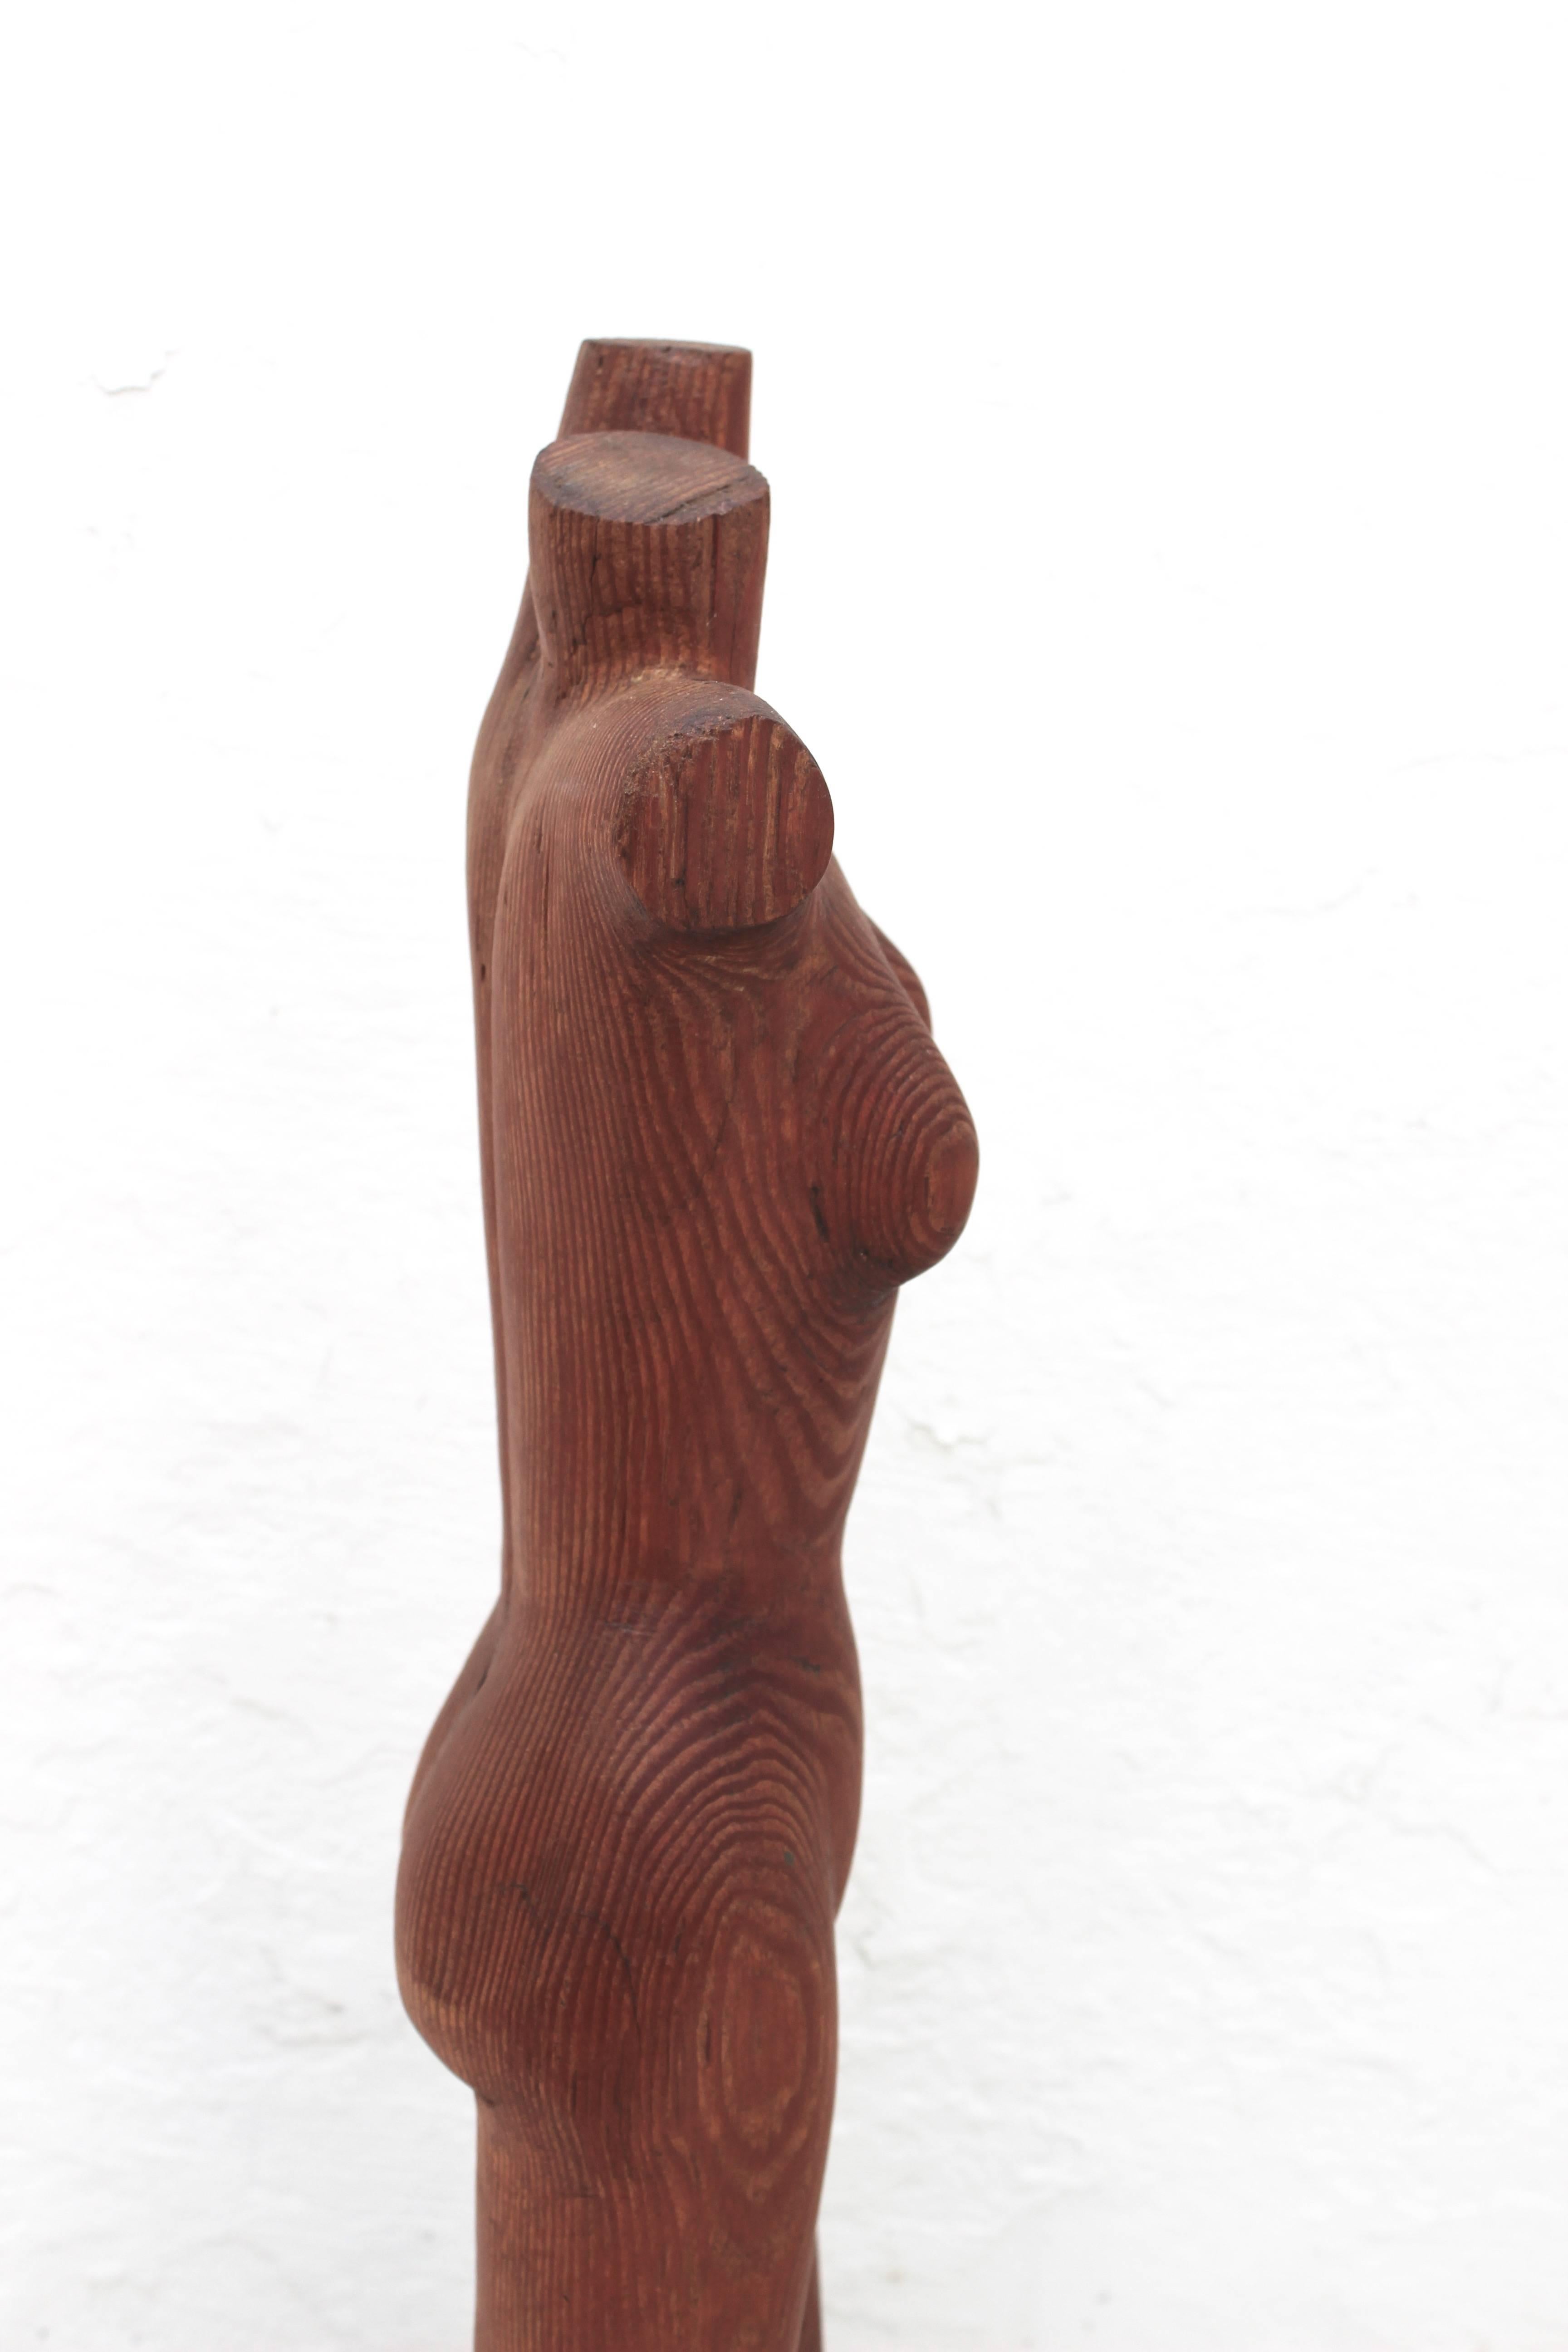 Carved Wood Female Sculpture 2